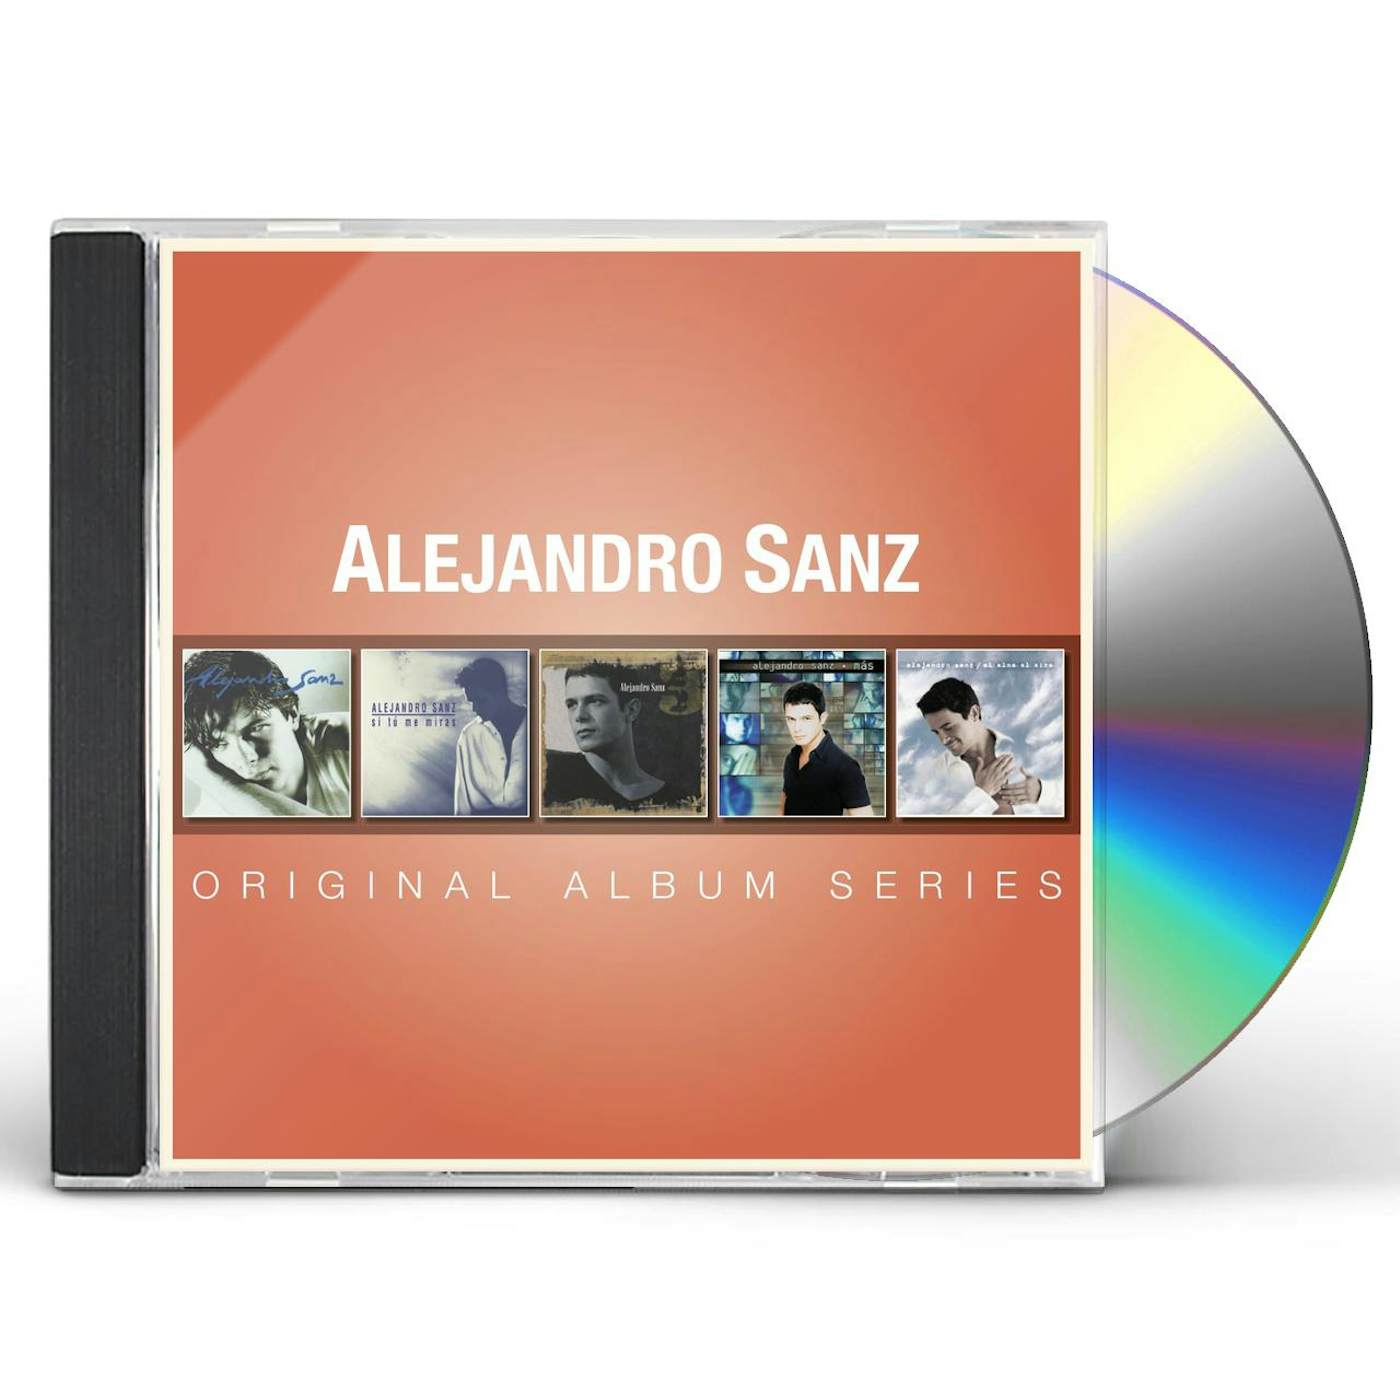 Alejandro Sanz ORIGINAL ALBUM SERIES CD